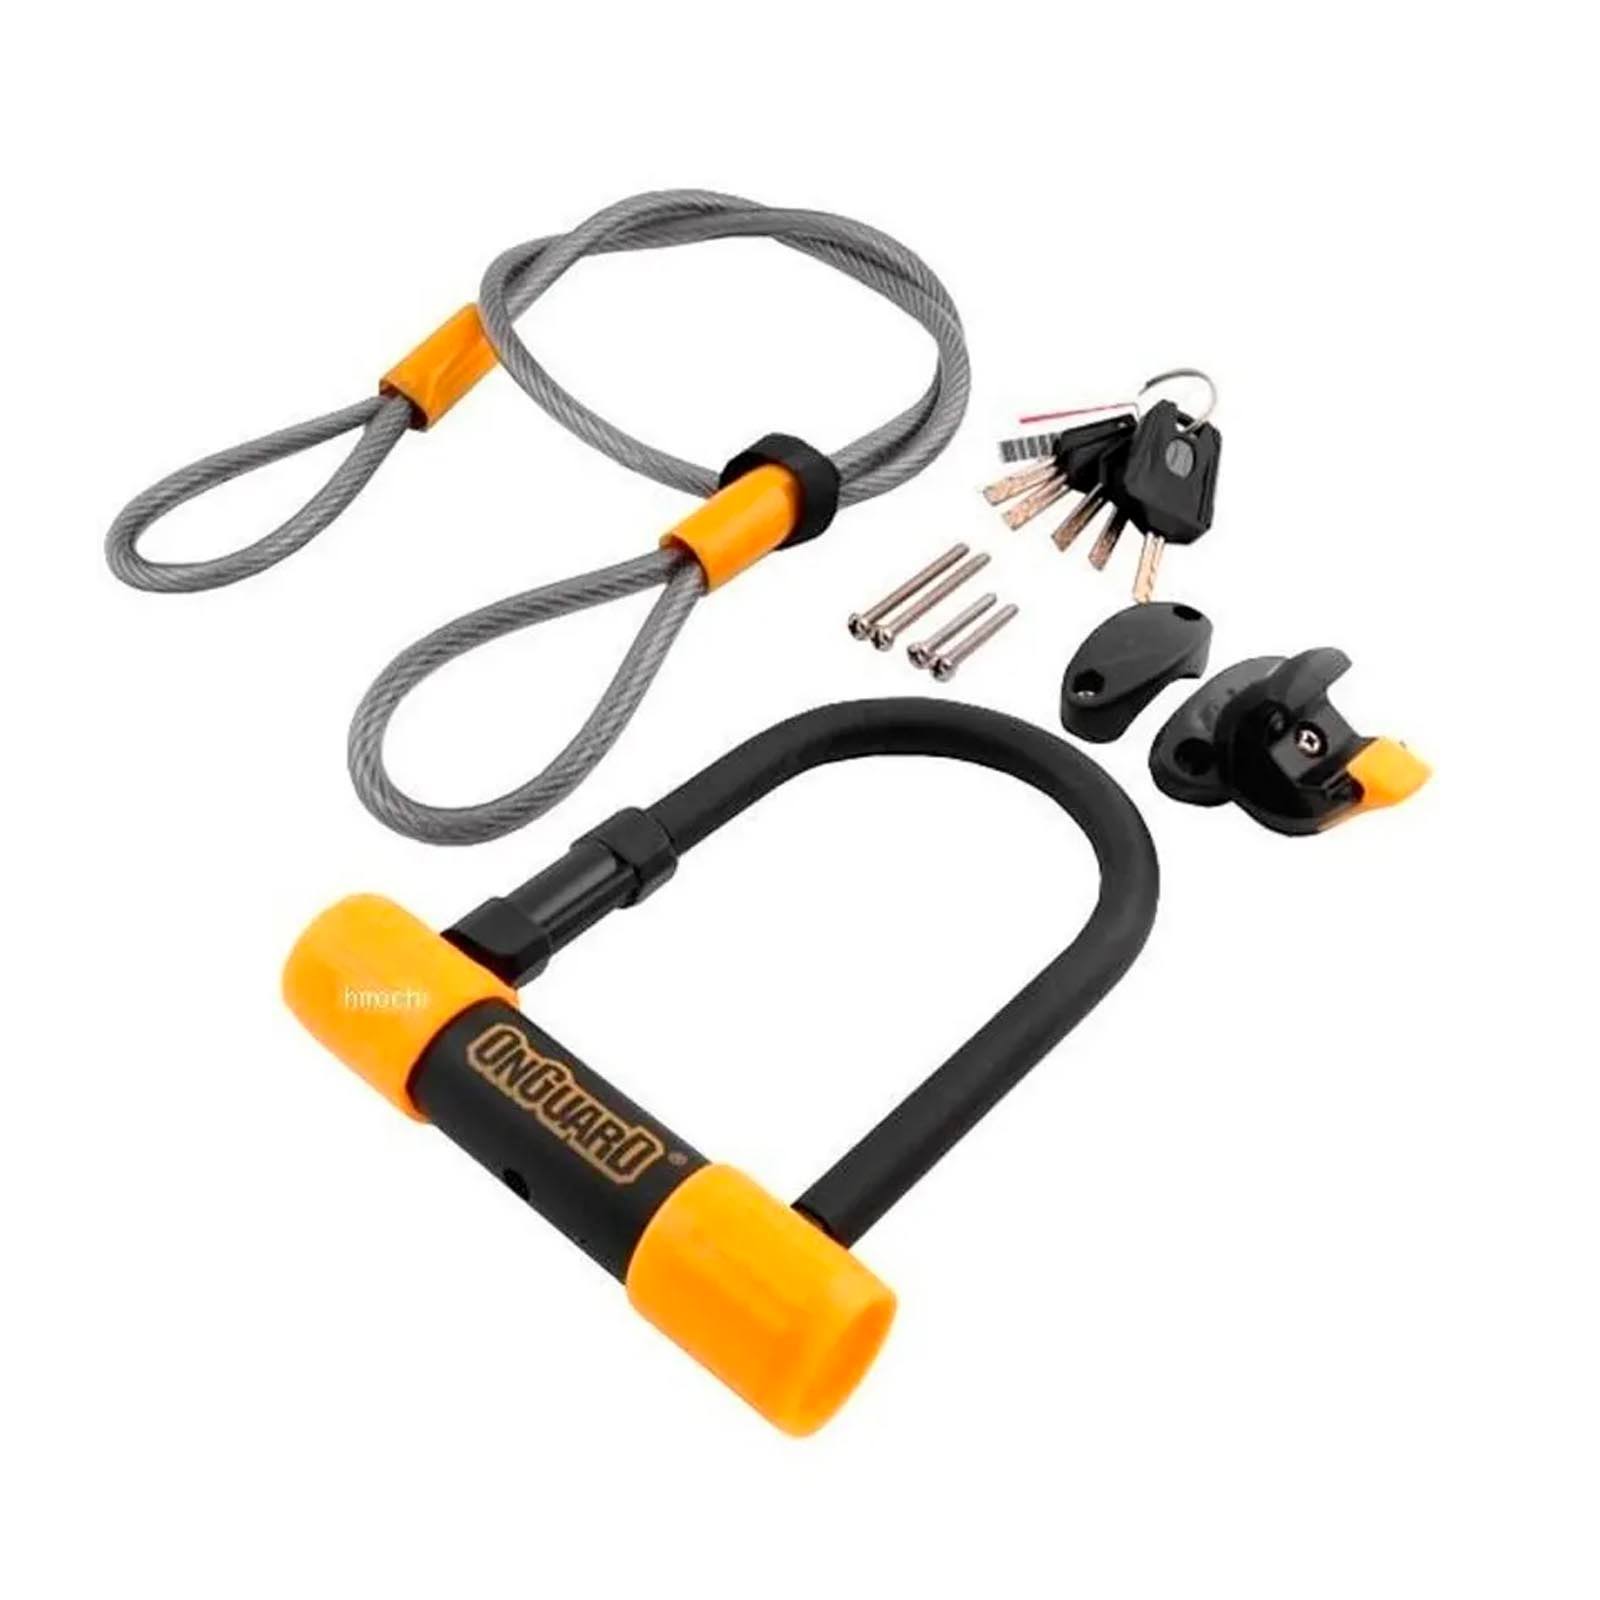 Onguard Bulldog Mini DT U-Lock & Cable - Black & Yellow, 8.9cm x14cm